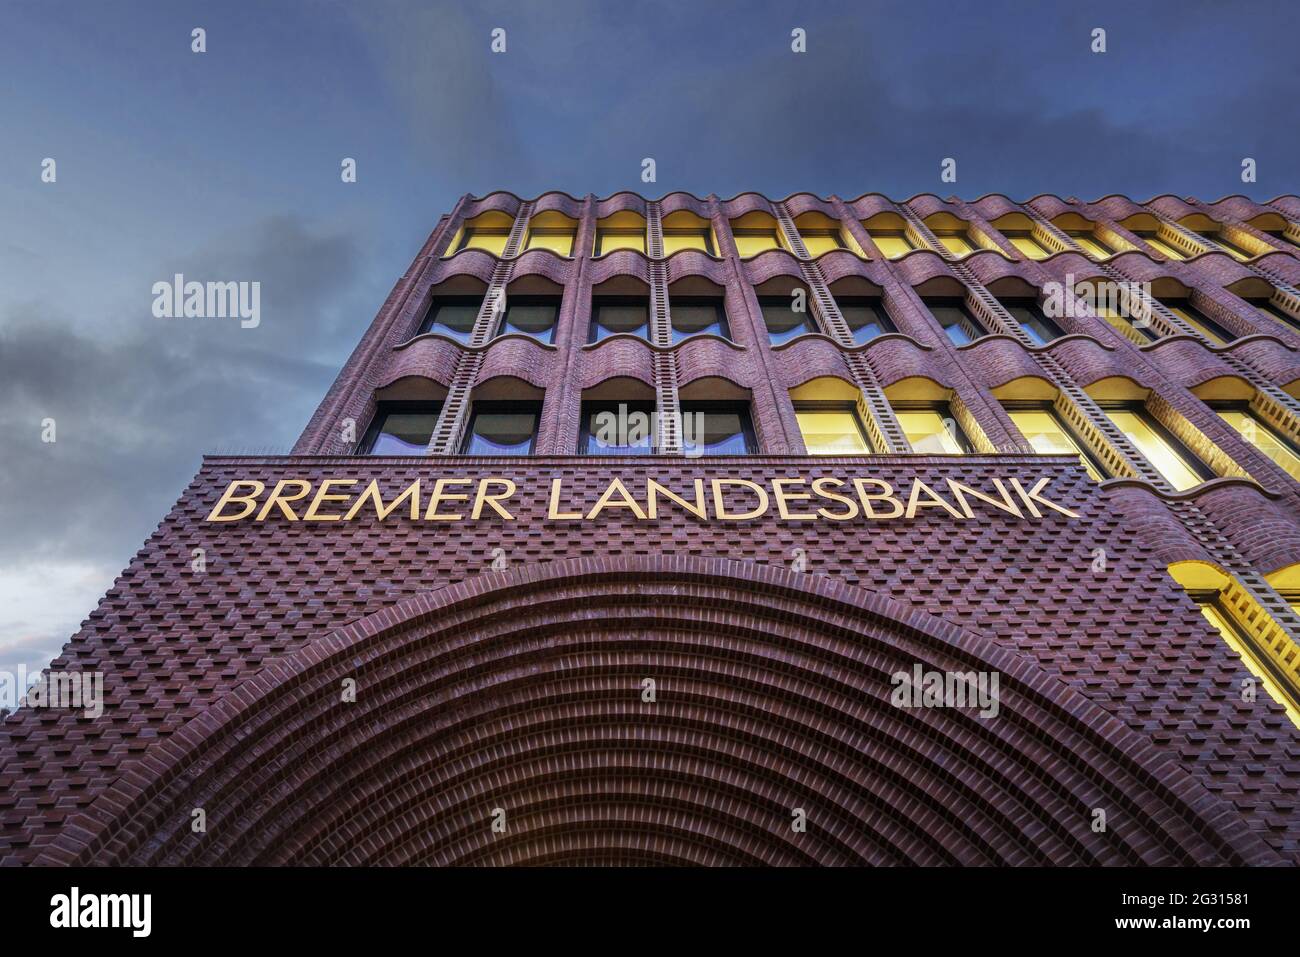 Bremen, Germany - Jan 07, 2020: Bremer Landesbank at Domshof - Bremen, Germany Stock Photo